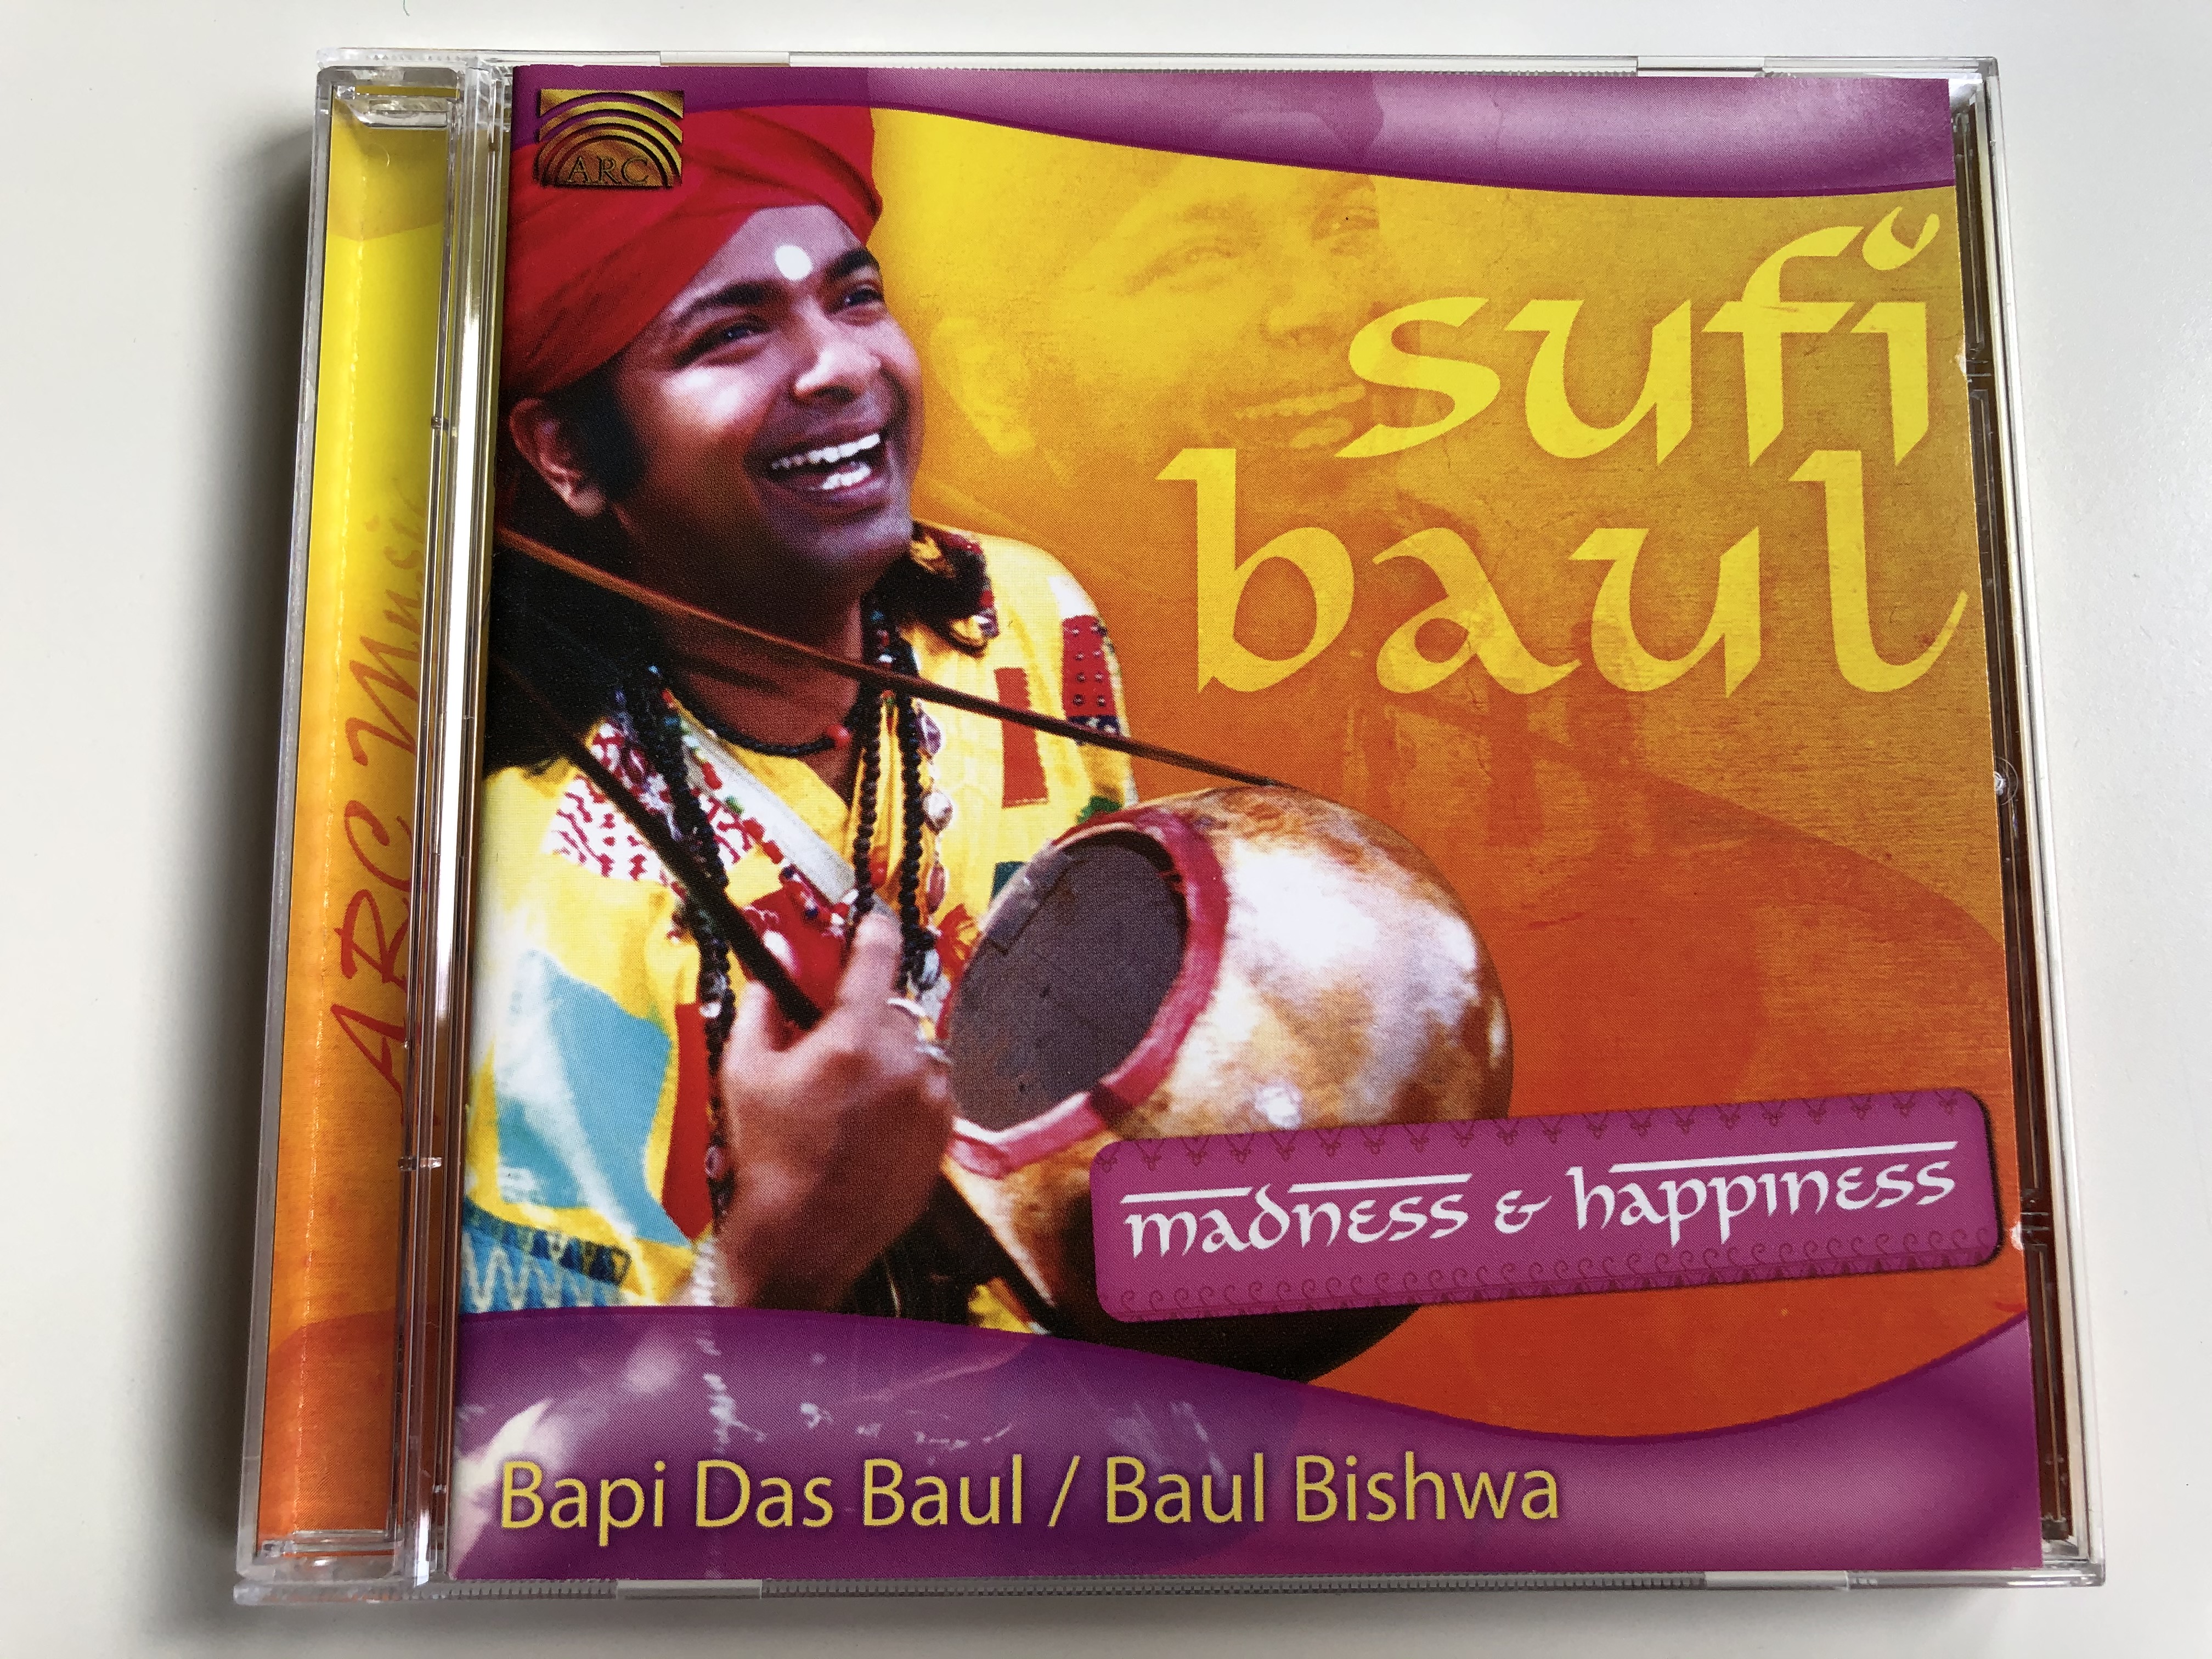 sufi-baul-madness-happiness-bapi-das-baul-baul-bishwa-arc-music-audio-cd-2009-eucd-2208-1-.jpg